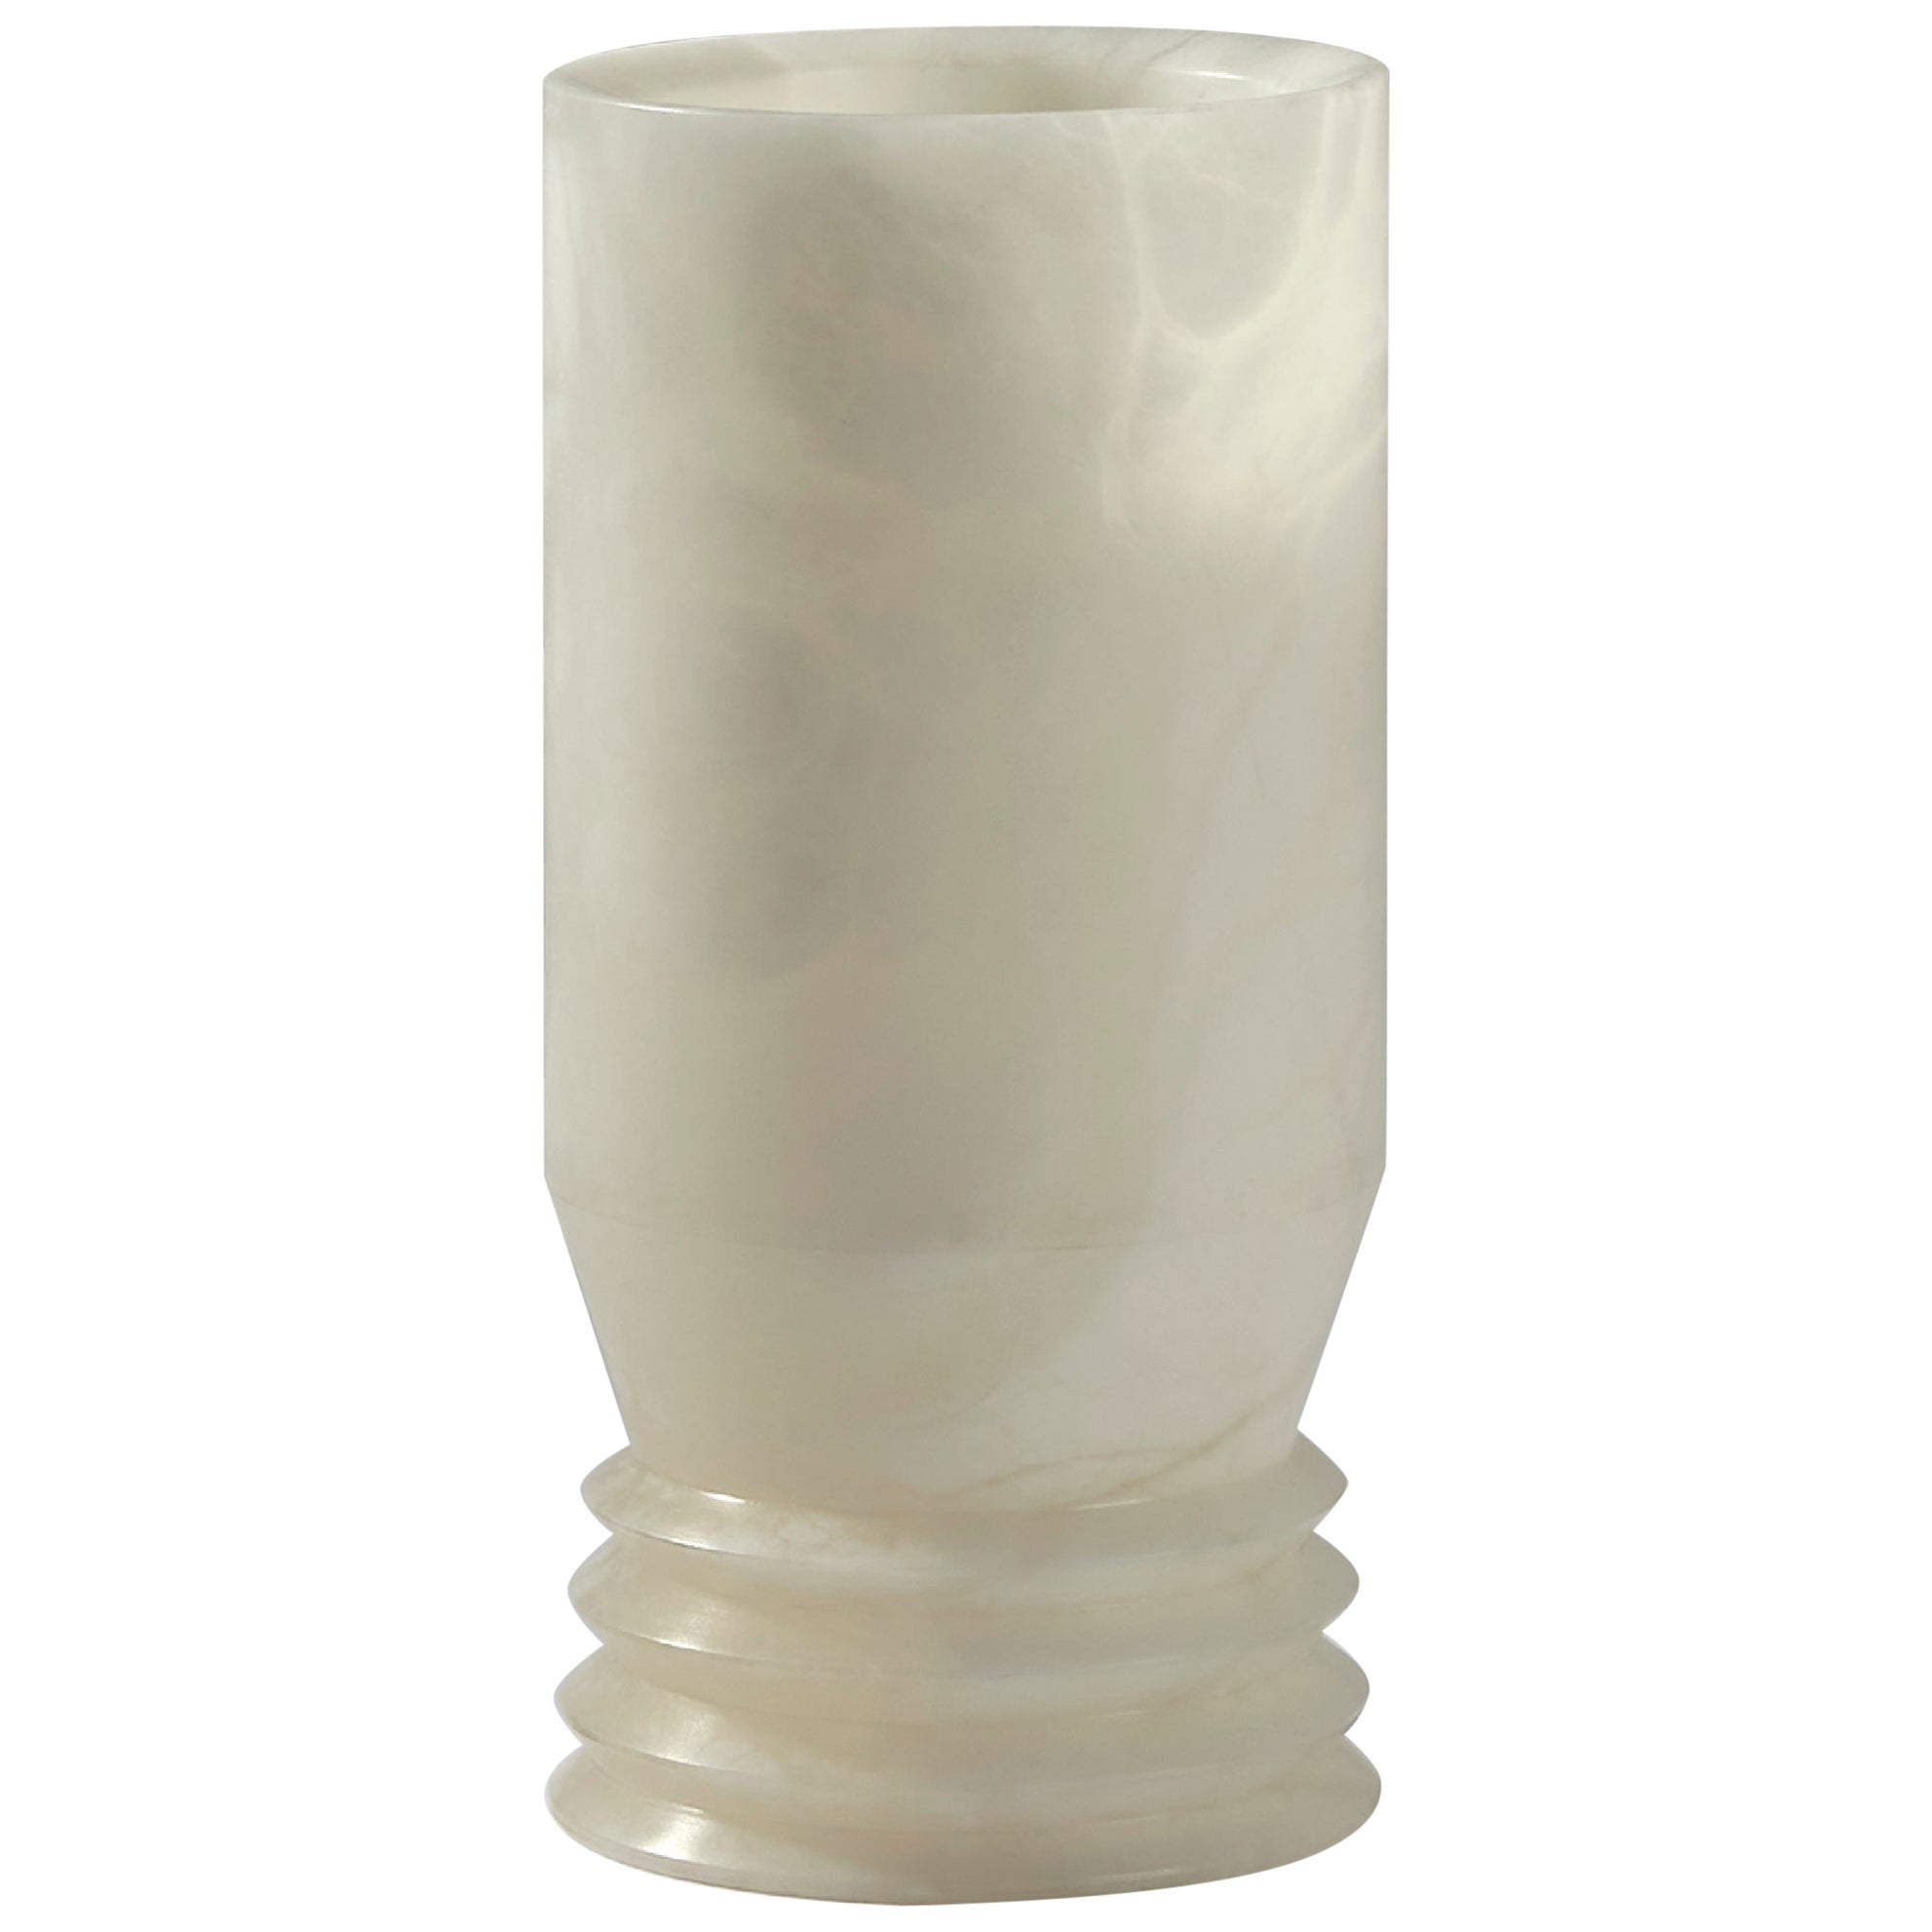 Vase « Strato due » en albâtre toscan d'Andrea Grecucci